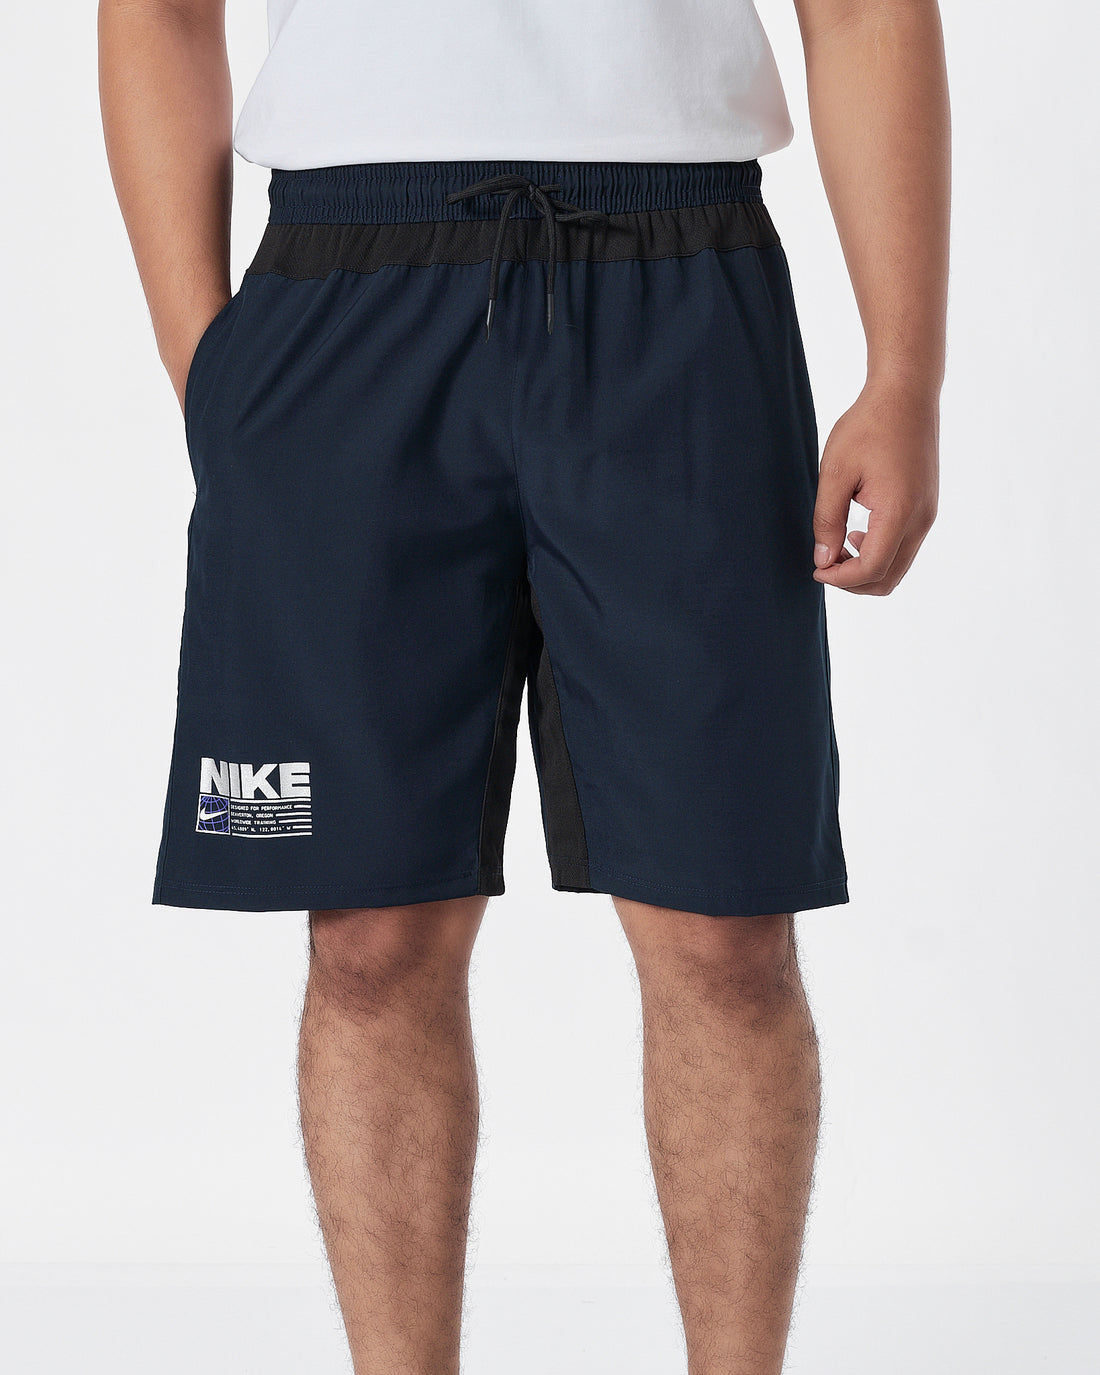 NIK Logo Printed Men Blue Track Shorts 12.90